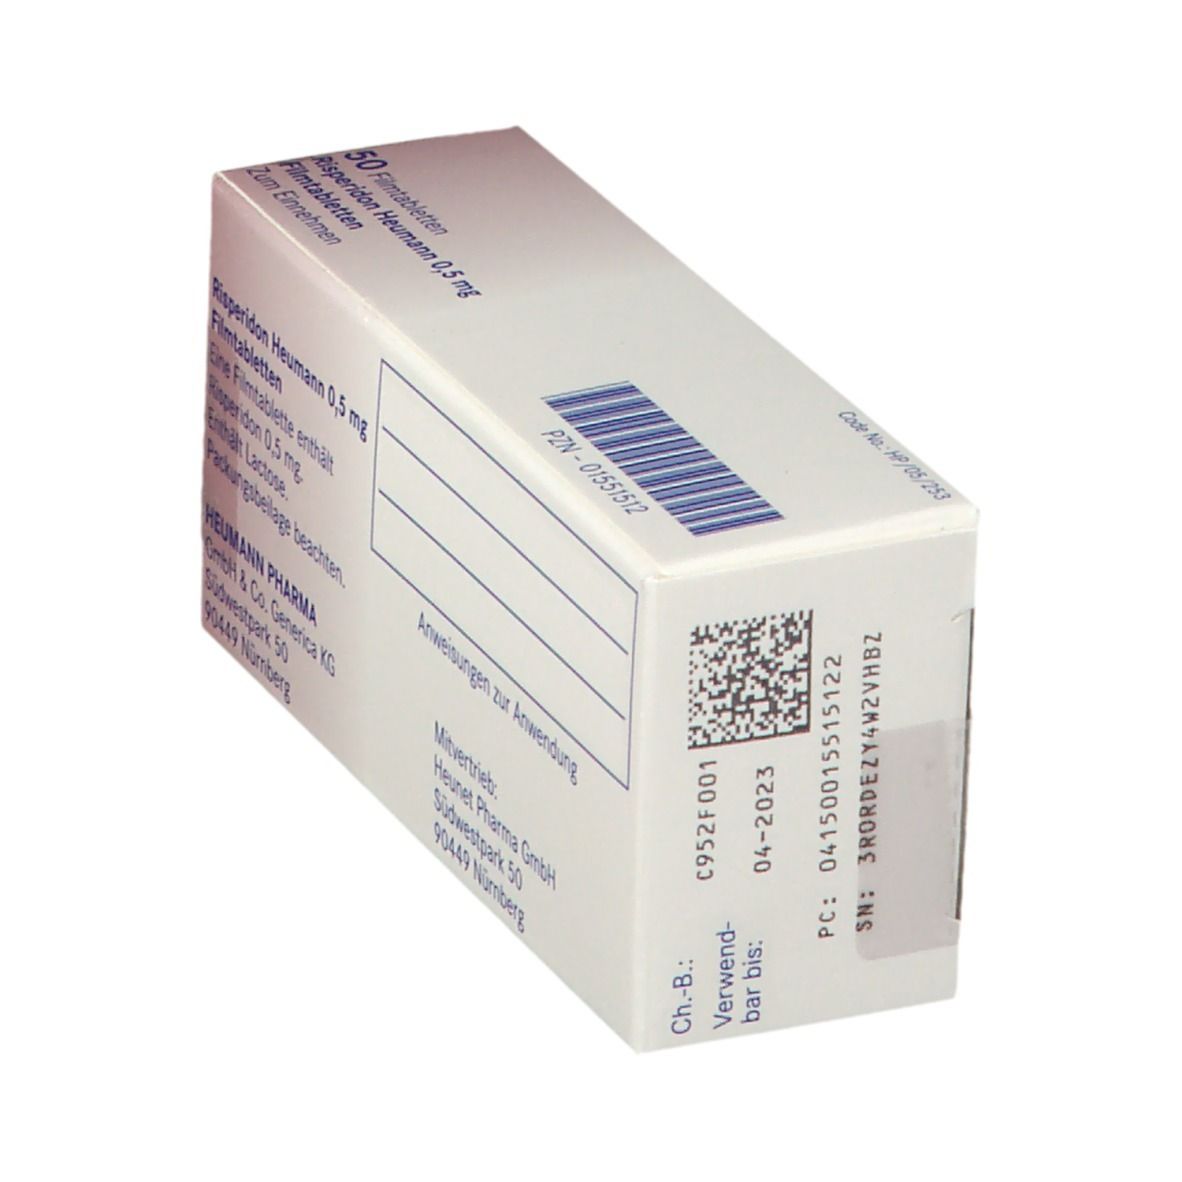 Risperidon Heumann 0,5 mg